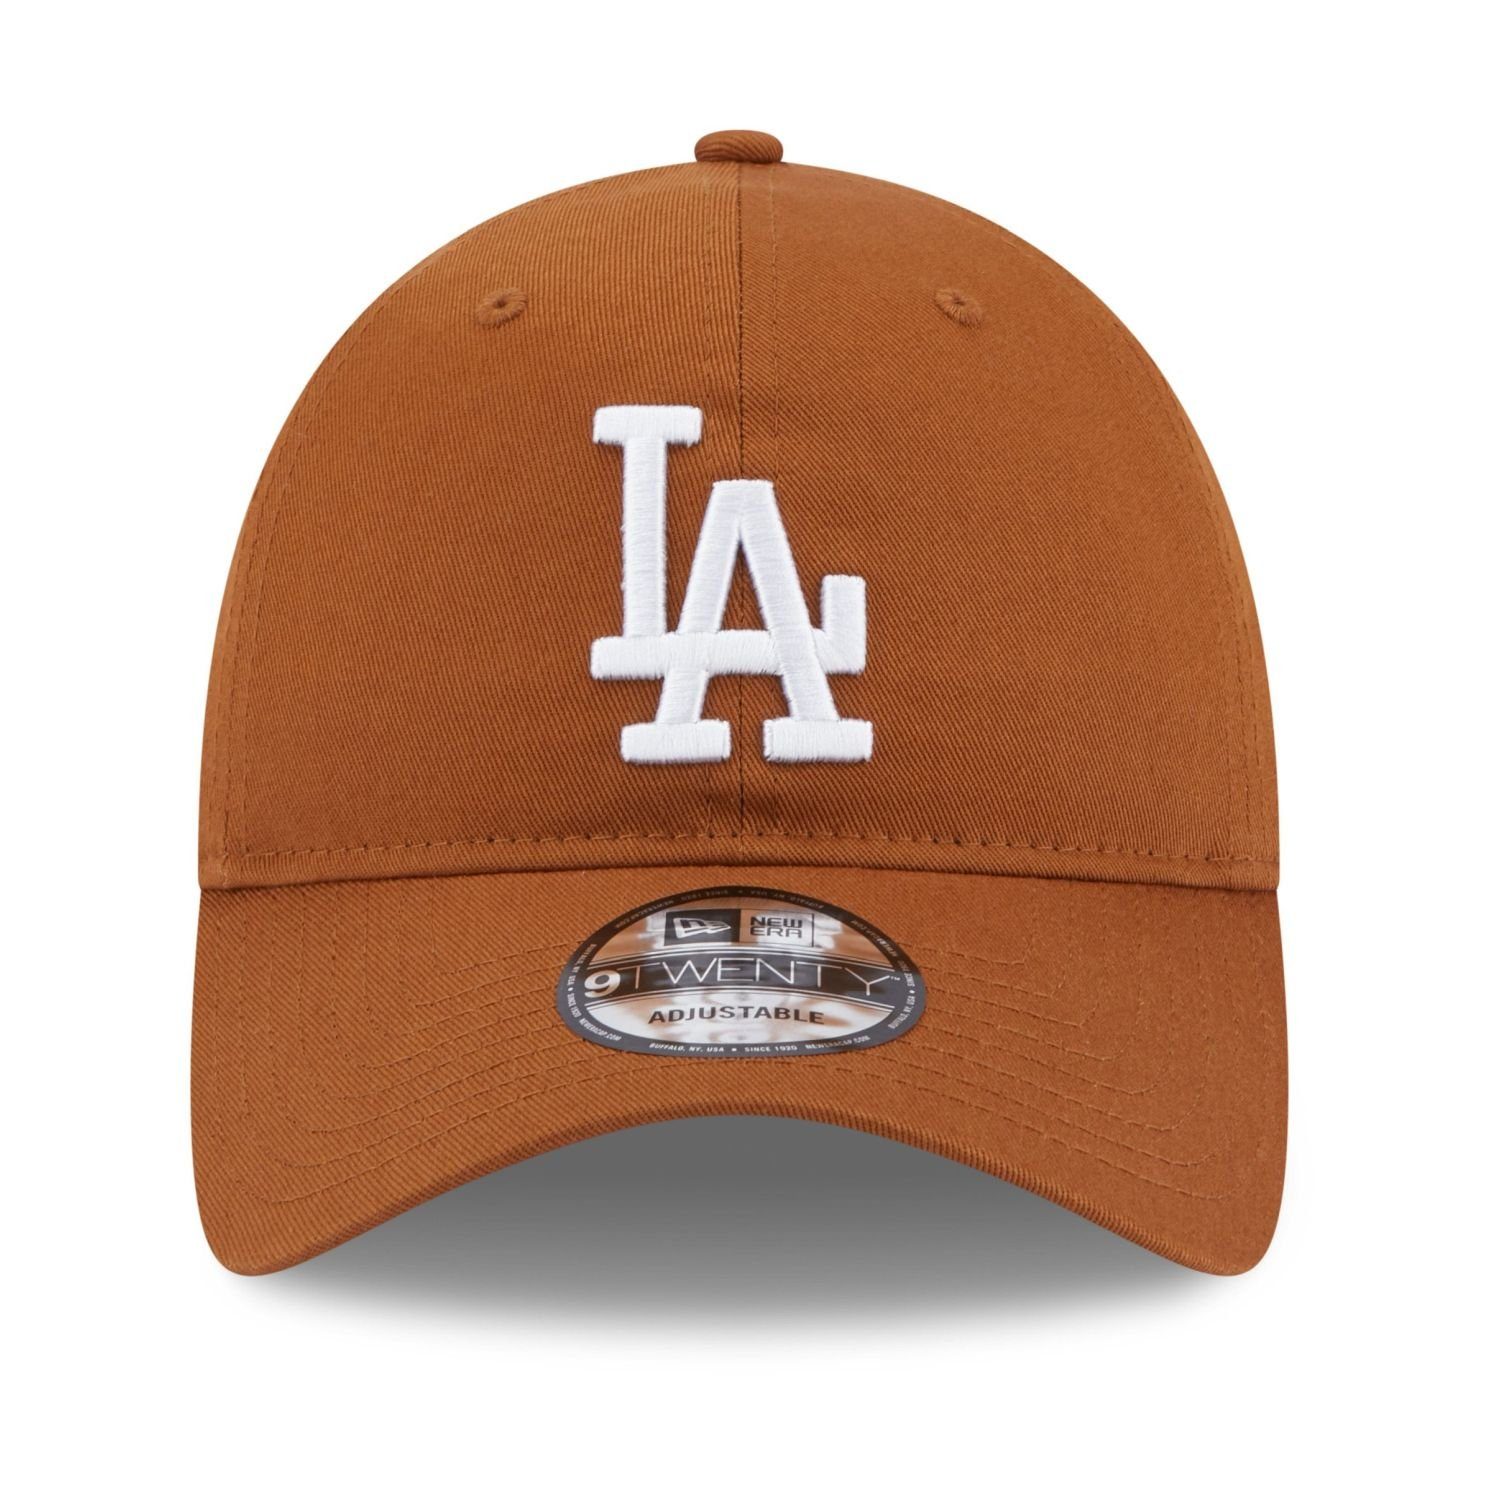 New Era Baseball Dodgers Strapback toasted Cap 9Twenty Los Angeles